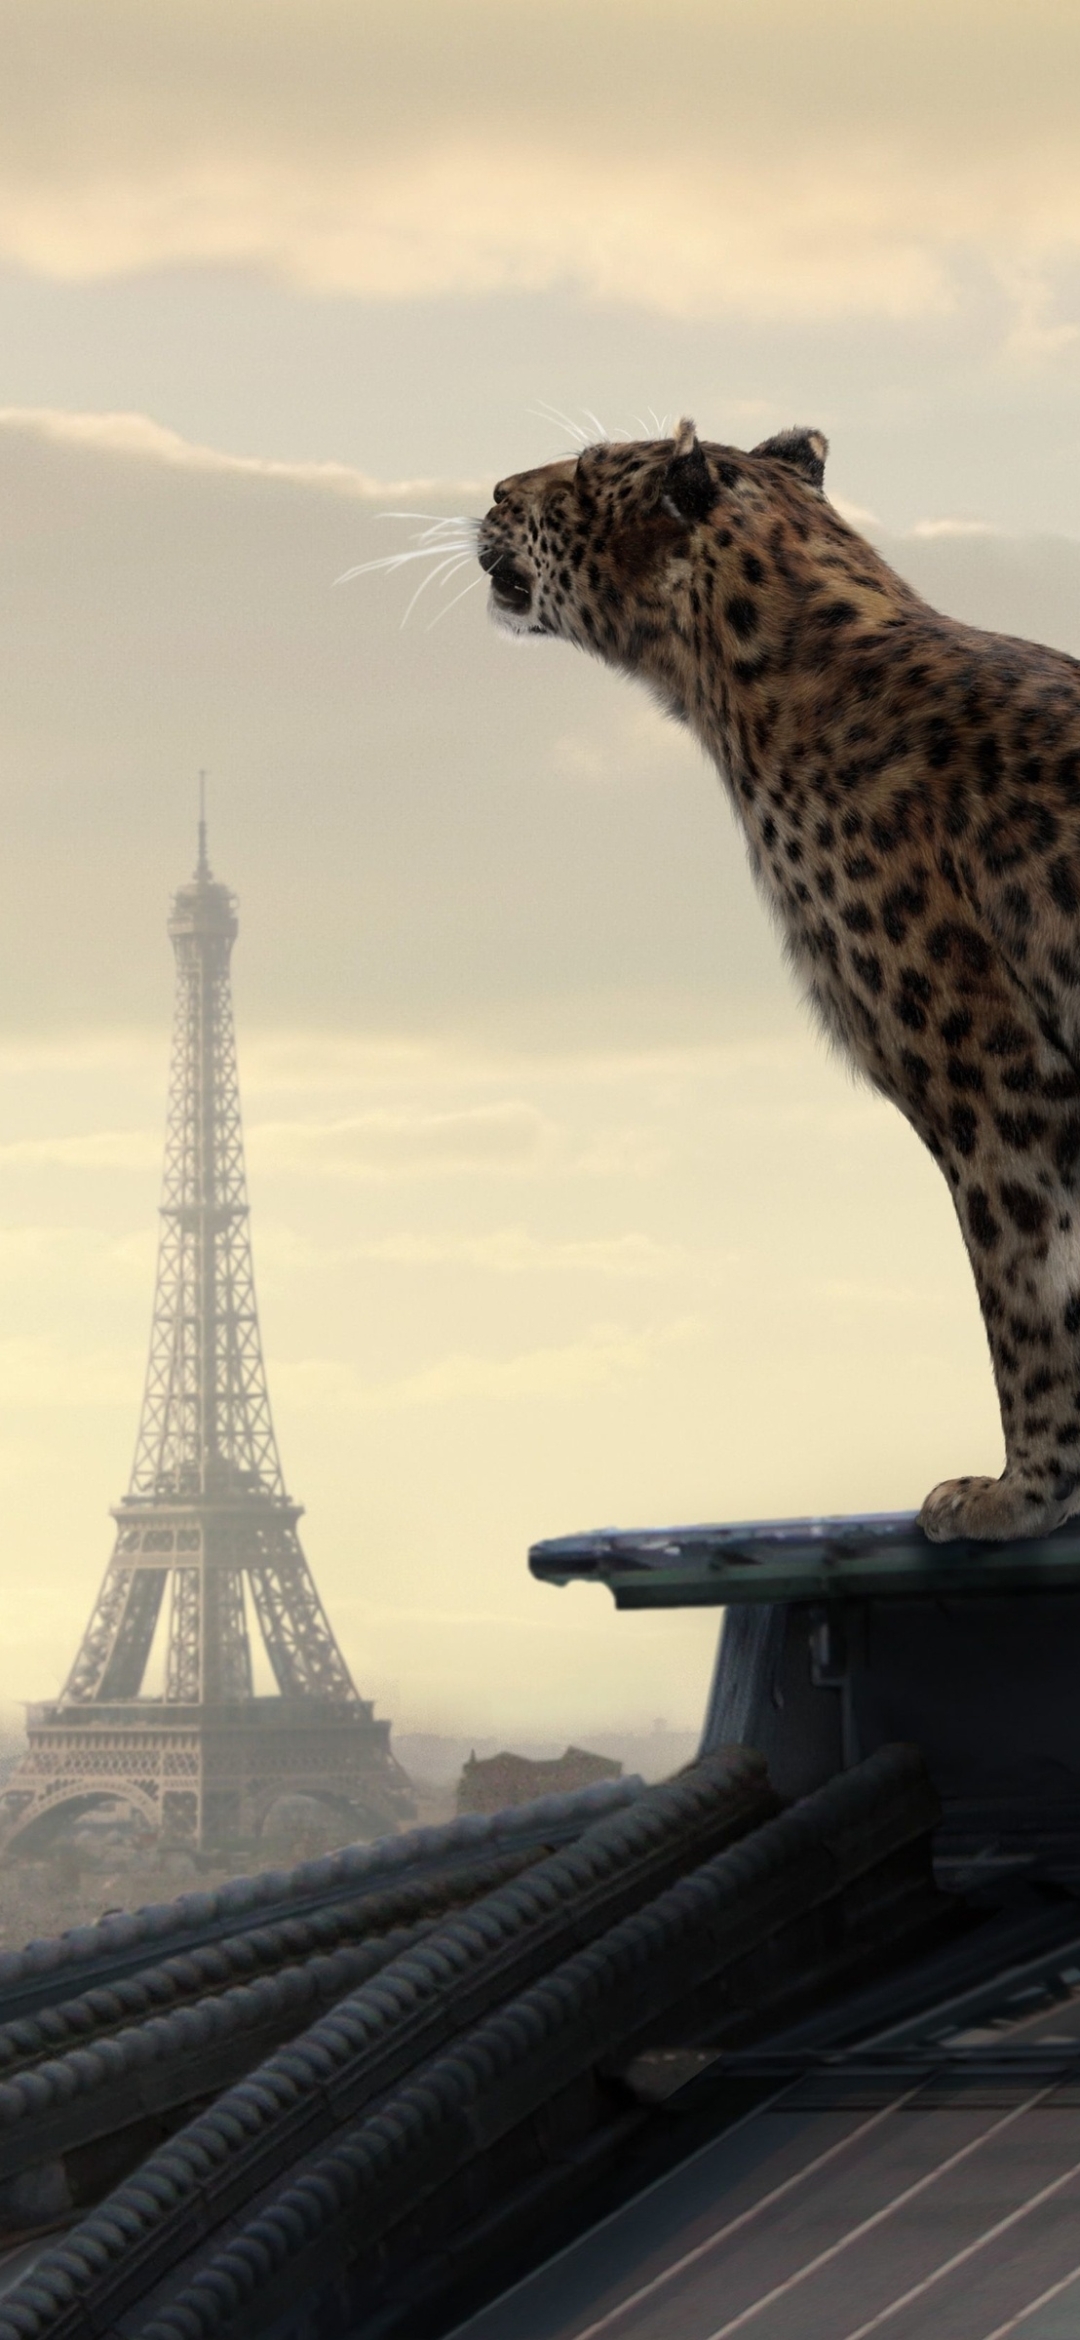 Descarga gratuita de fondo de pantalla para móvil de Animales, Gatos, París, Jaguar, Torre Eiffel.